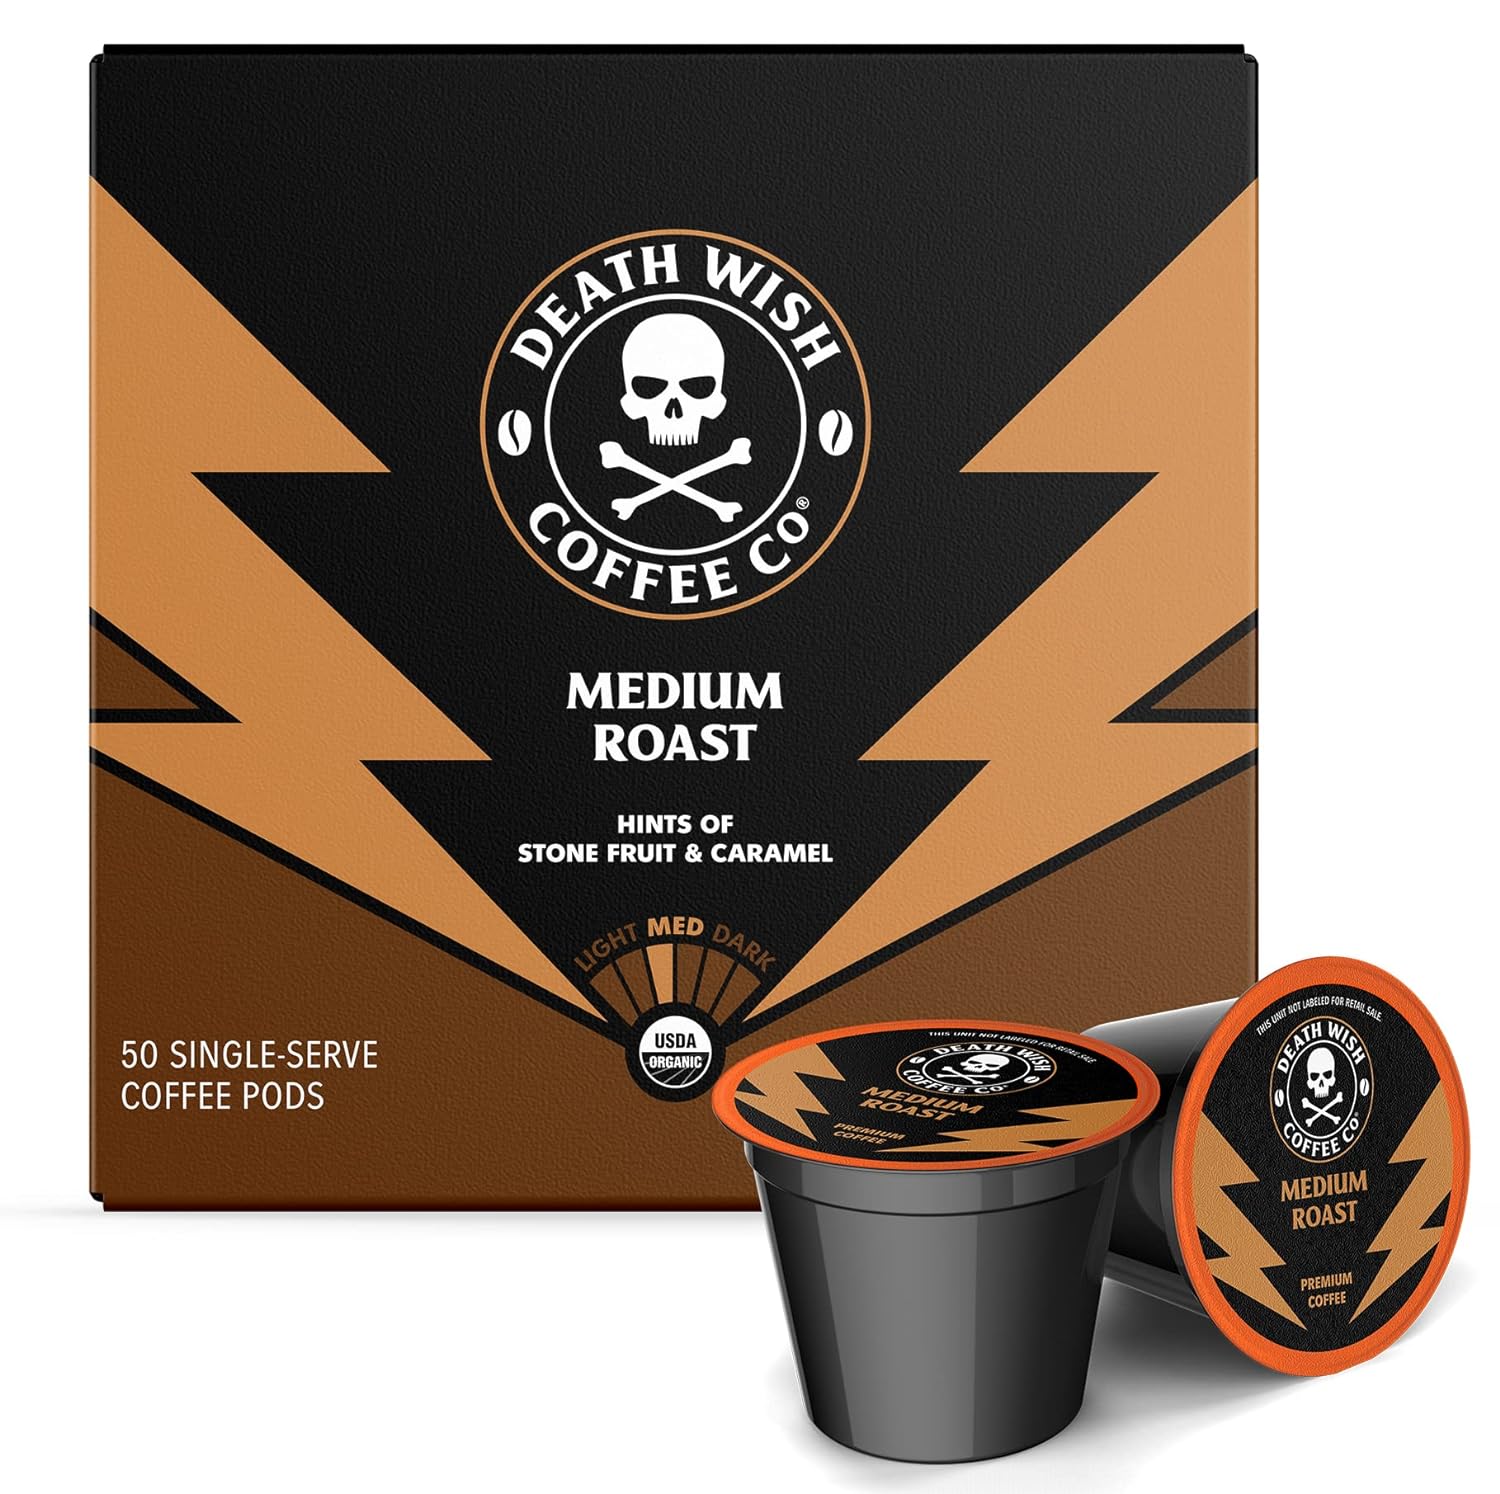 Death Wish Coffee Co. Medium Roast Single Serve Pods - Extra Kick of Caffeine - Lighter Blend of Bold Arabica & Robusta Beans - USDA Organic Bold Full Body Roast for a Day Lift (50 Count)